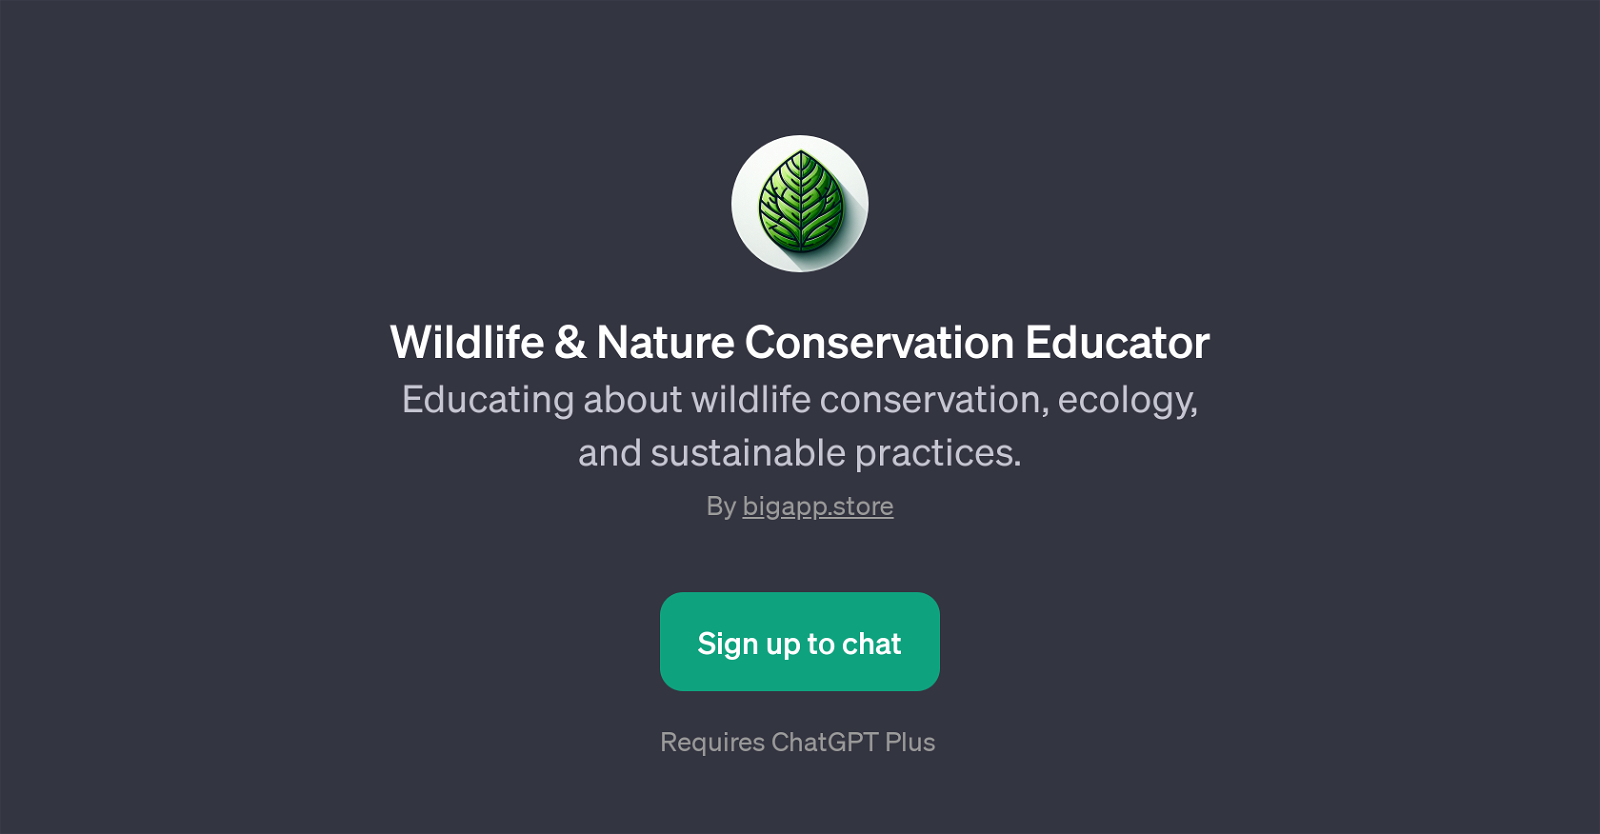 Wildlife & Nature Conservation Educator website